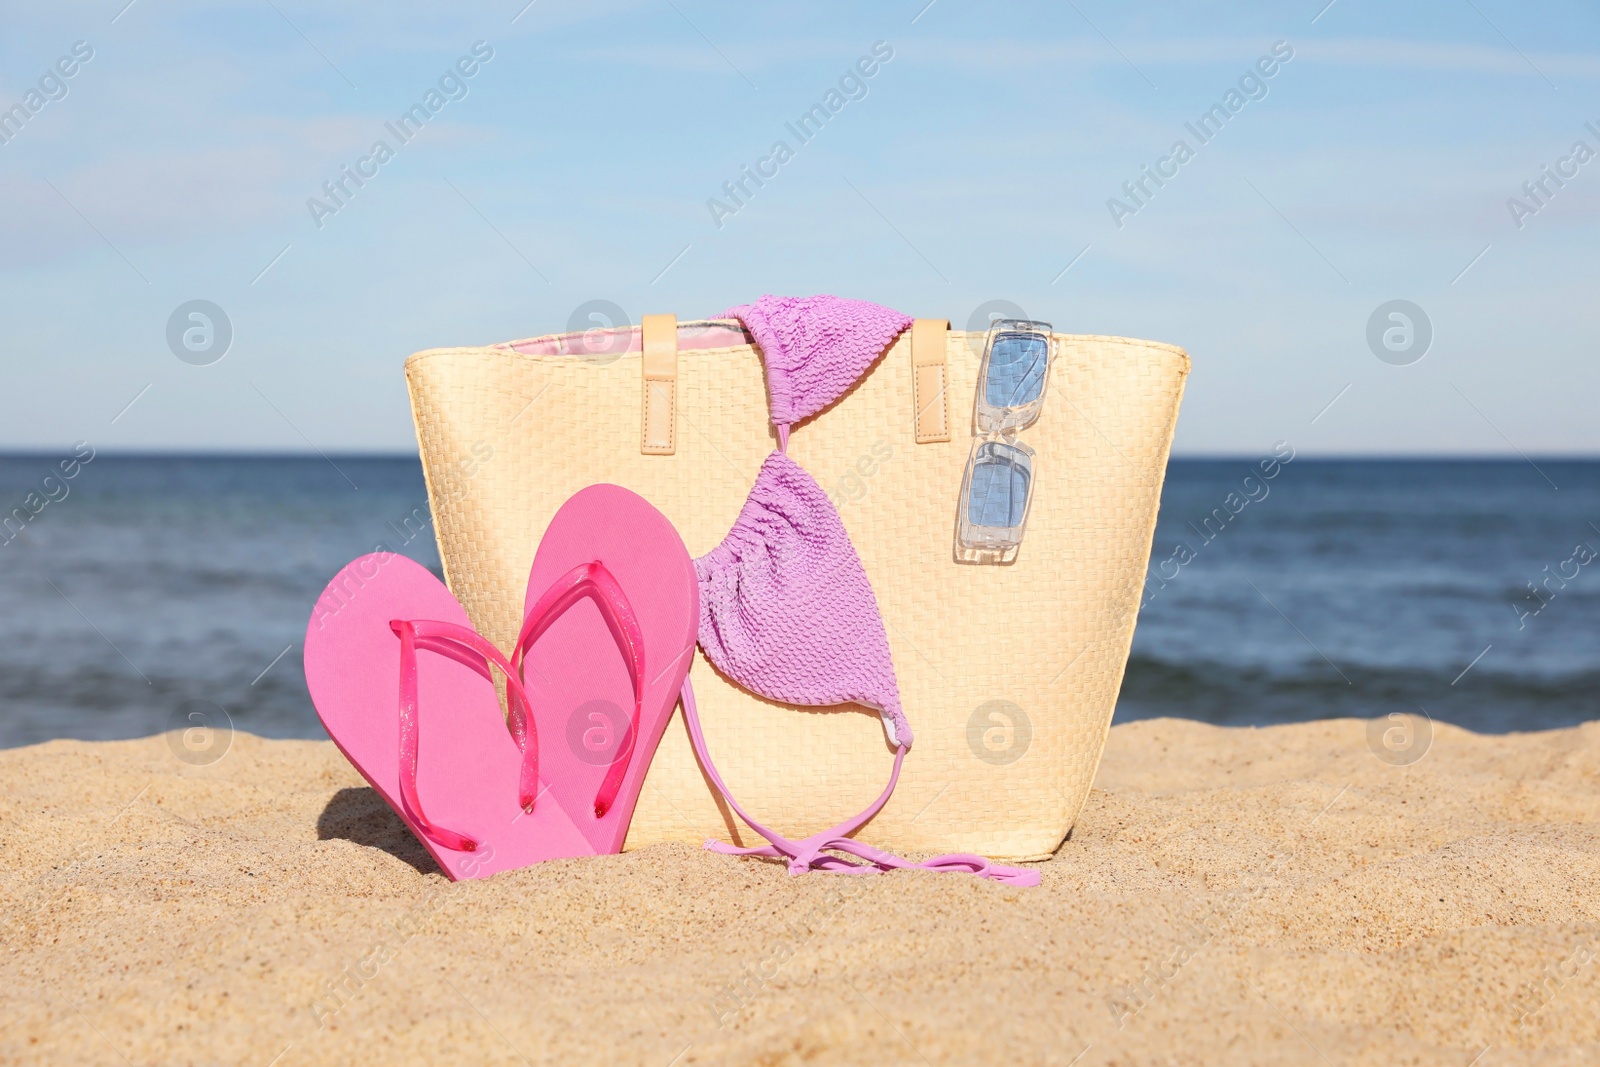 Photo of Summer bag with slippers, bikini top and sunglasses on sand near sea